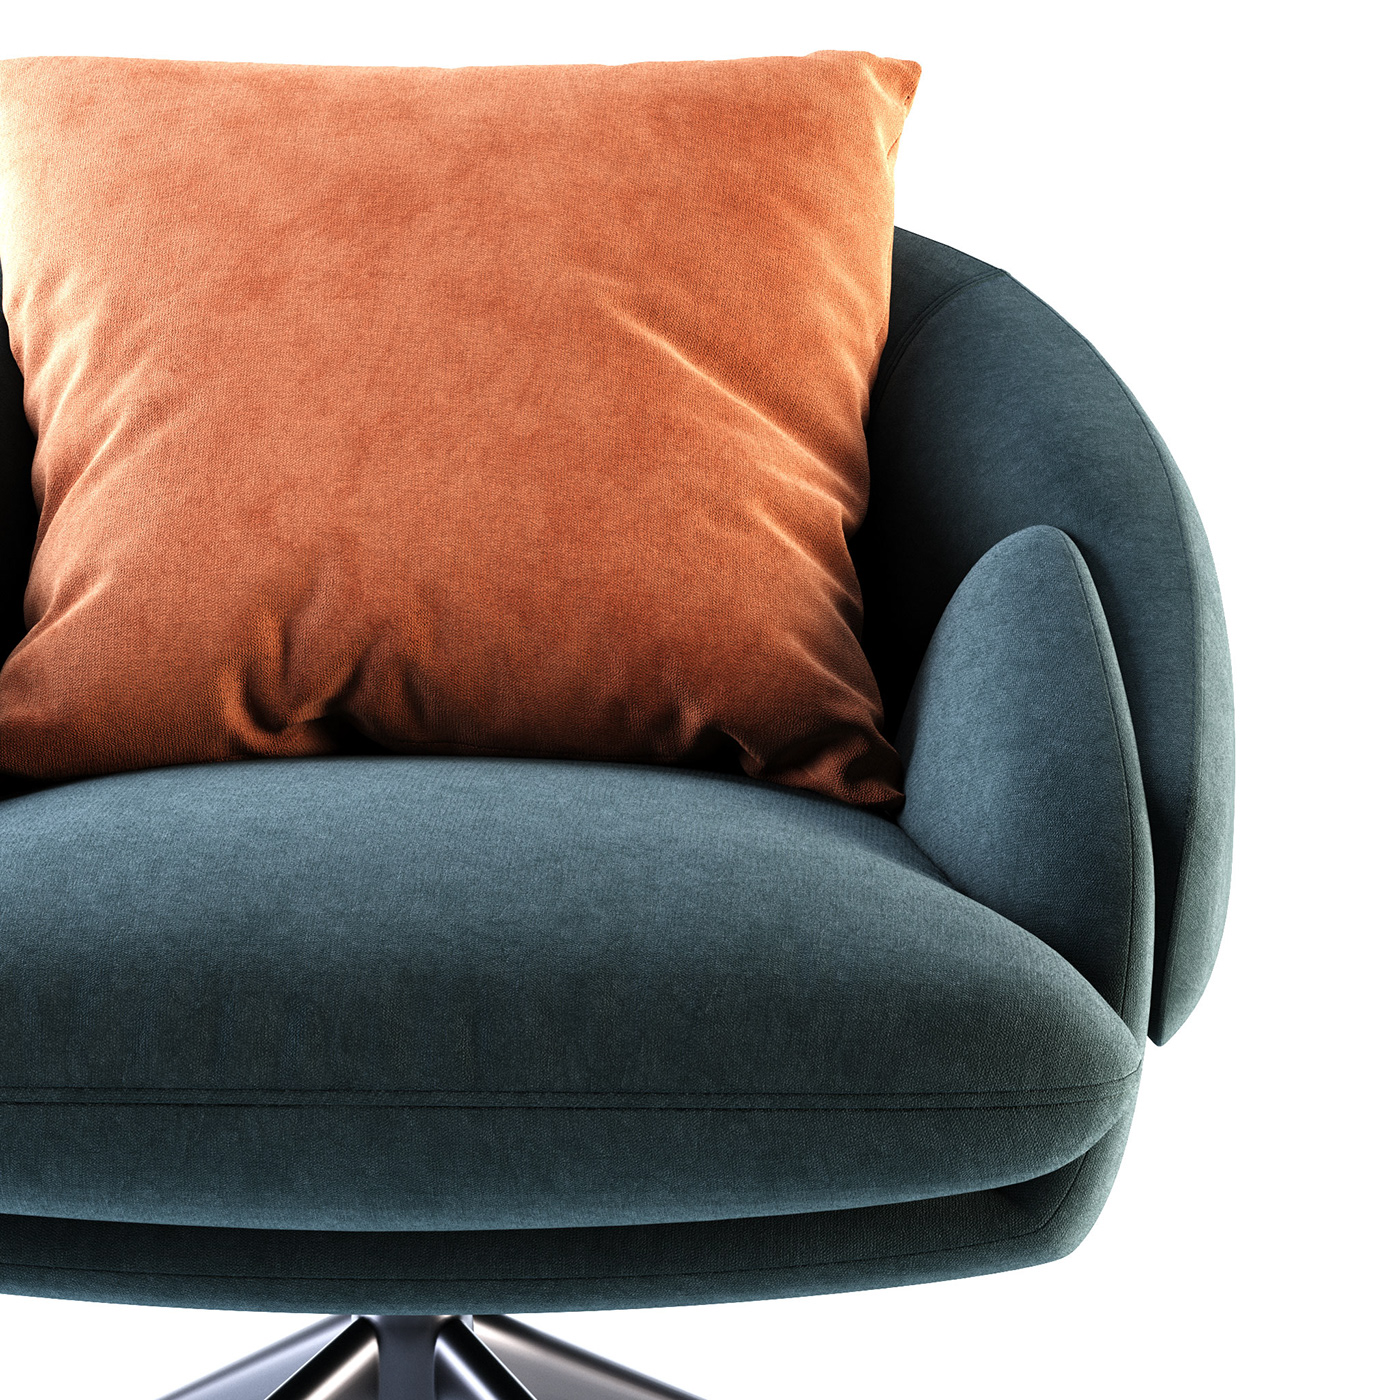 armchair furniture Render 3D modern corona visualization chair furniture design  cloth